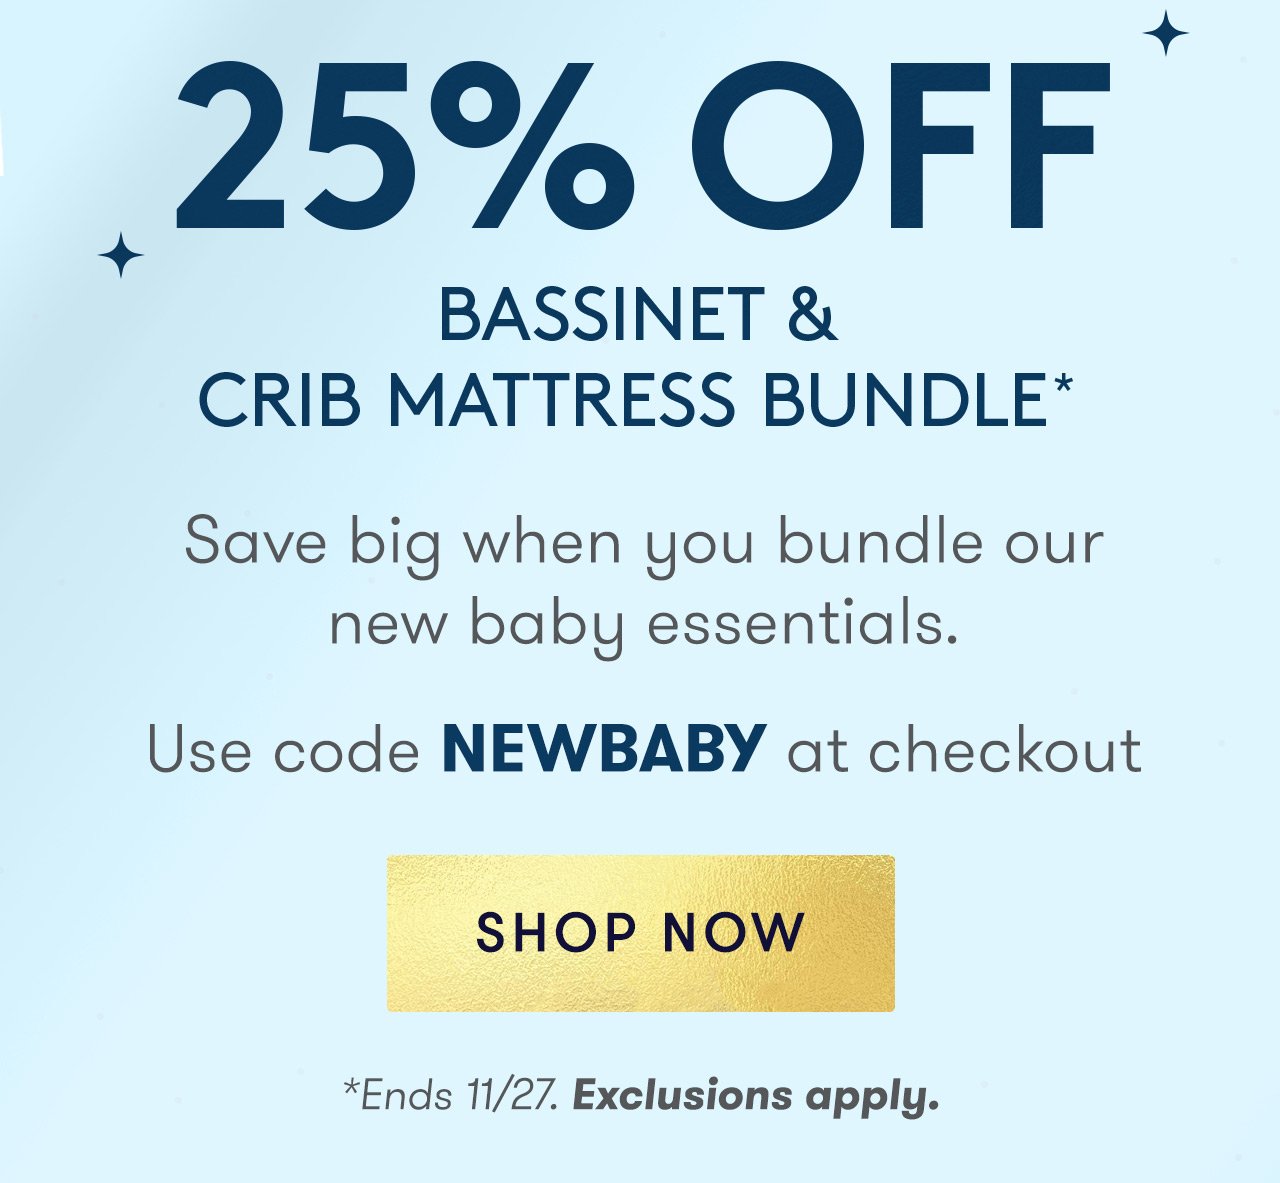 Bundle - Take 25% Off Bassinet & Crib Mattress Bundle